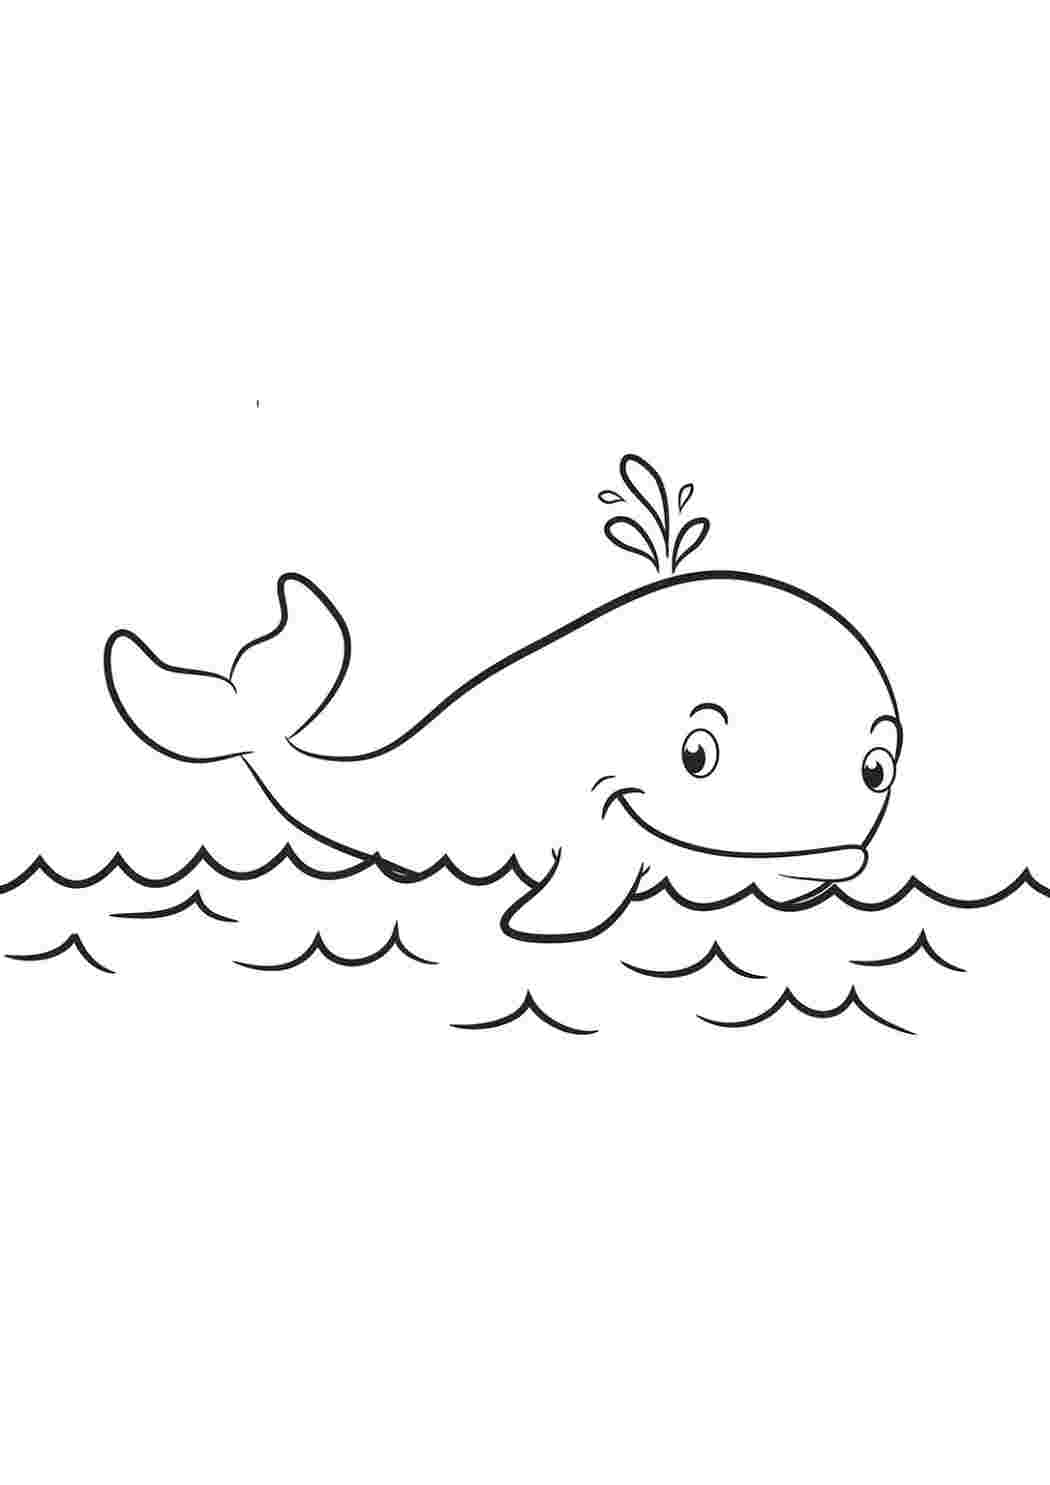 Раскраски море киты. Раскраски в формате А4. море киты. Онлайн раскраски.